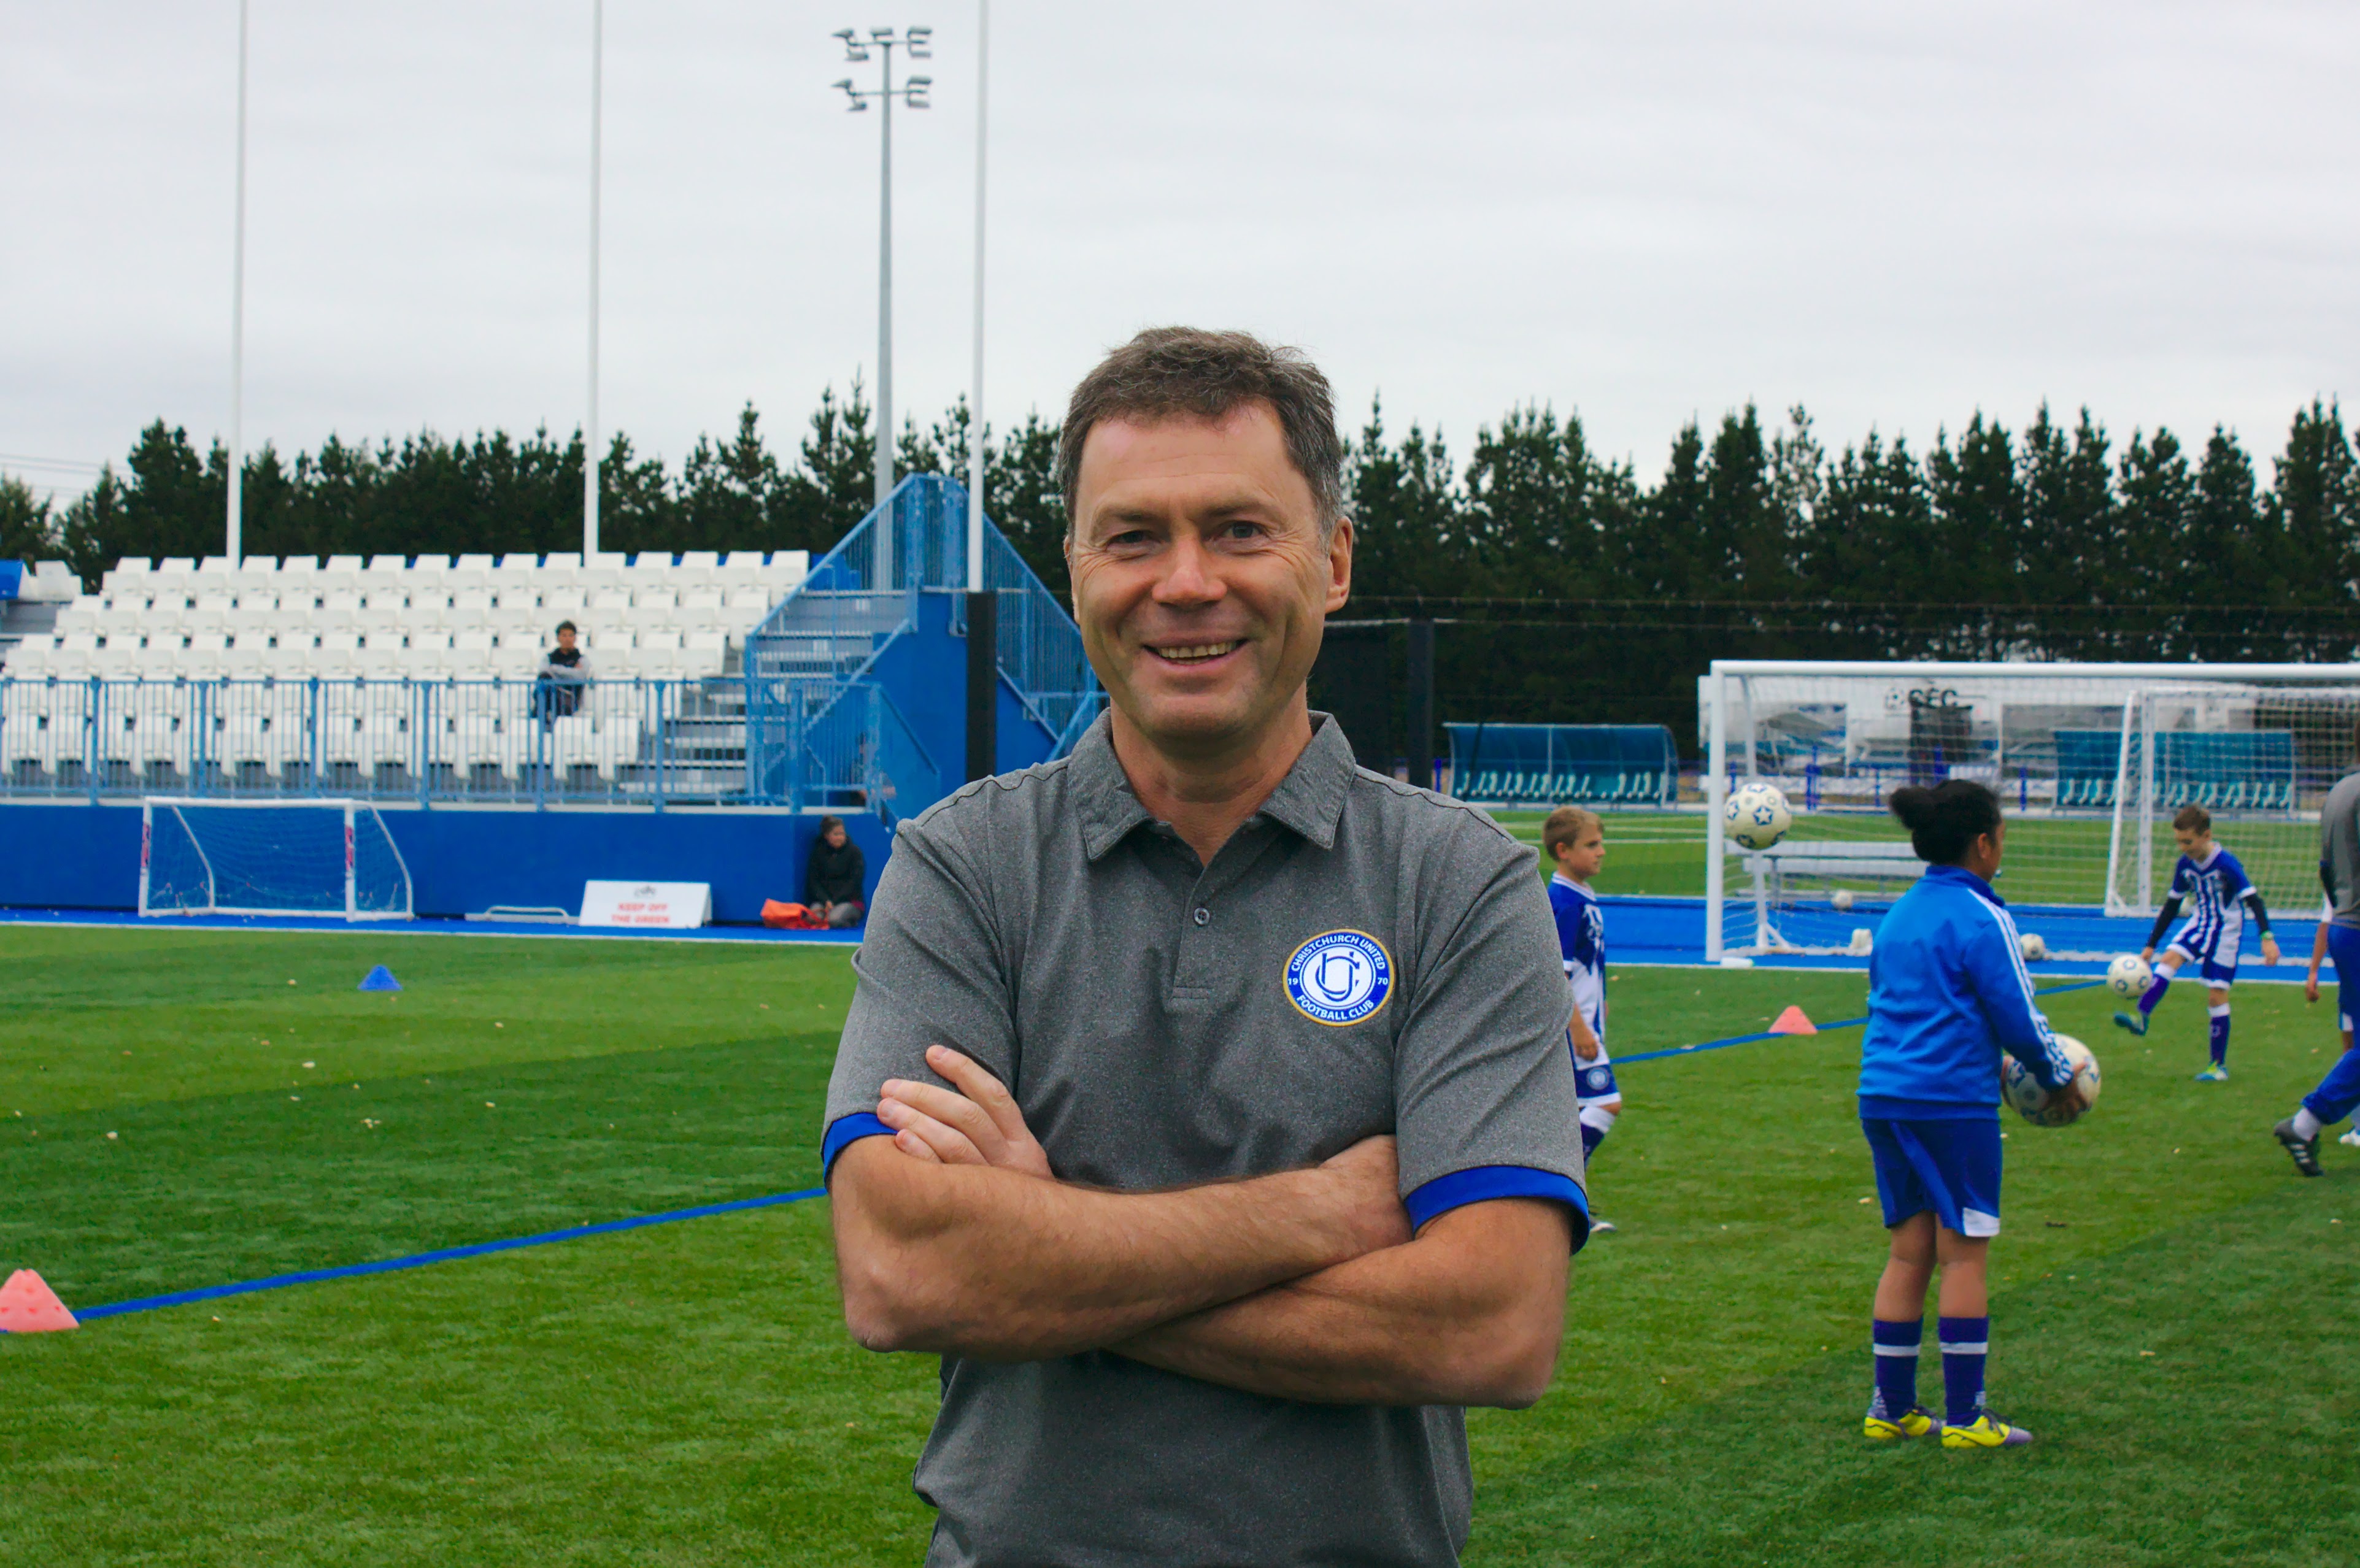 Slava Meyn at the Christchurch Football Centre. Photo Jim Watts / ODT file